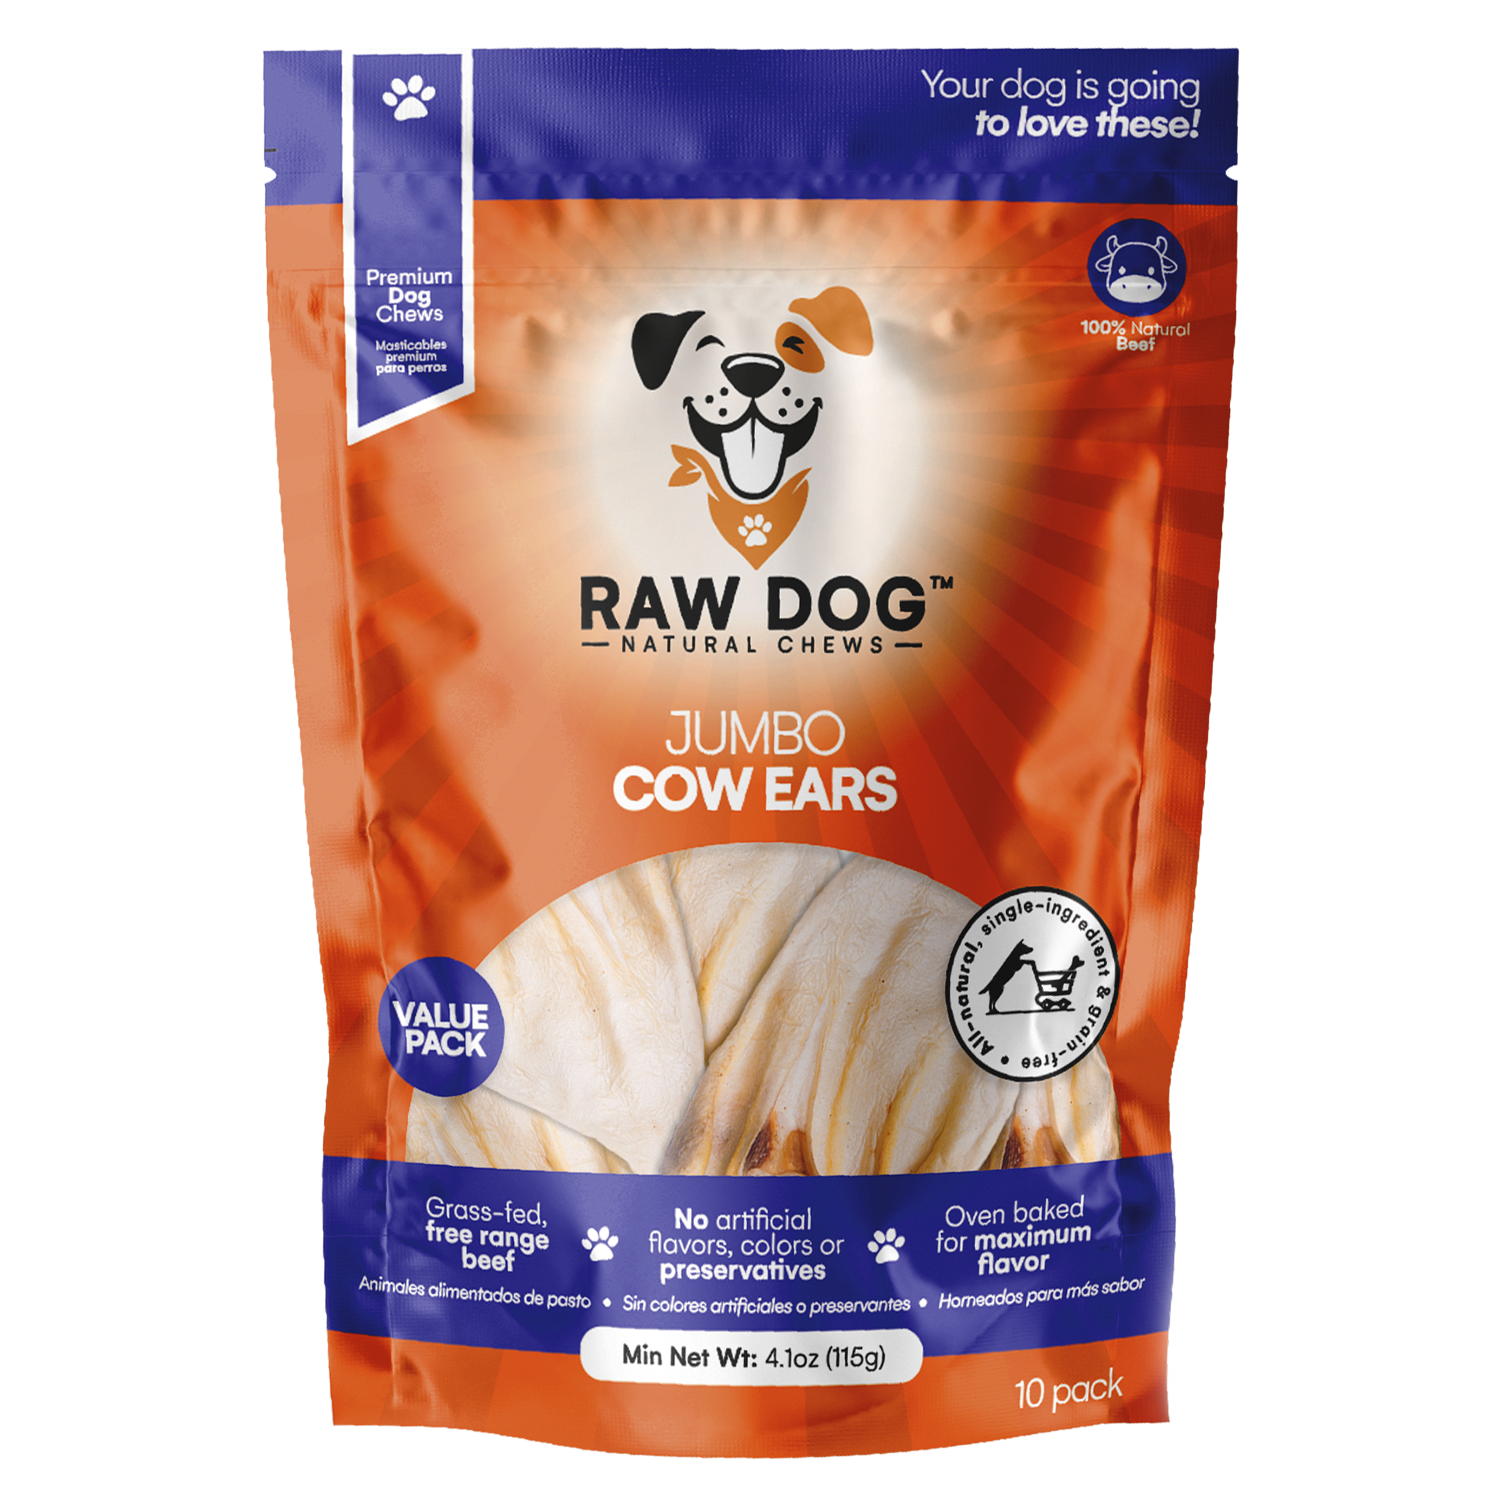 Jumbo Cow Ears - Raw Dog Chews